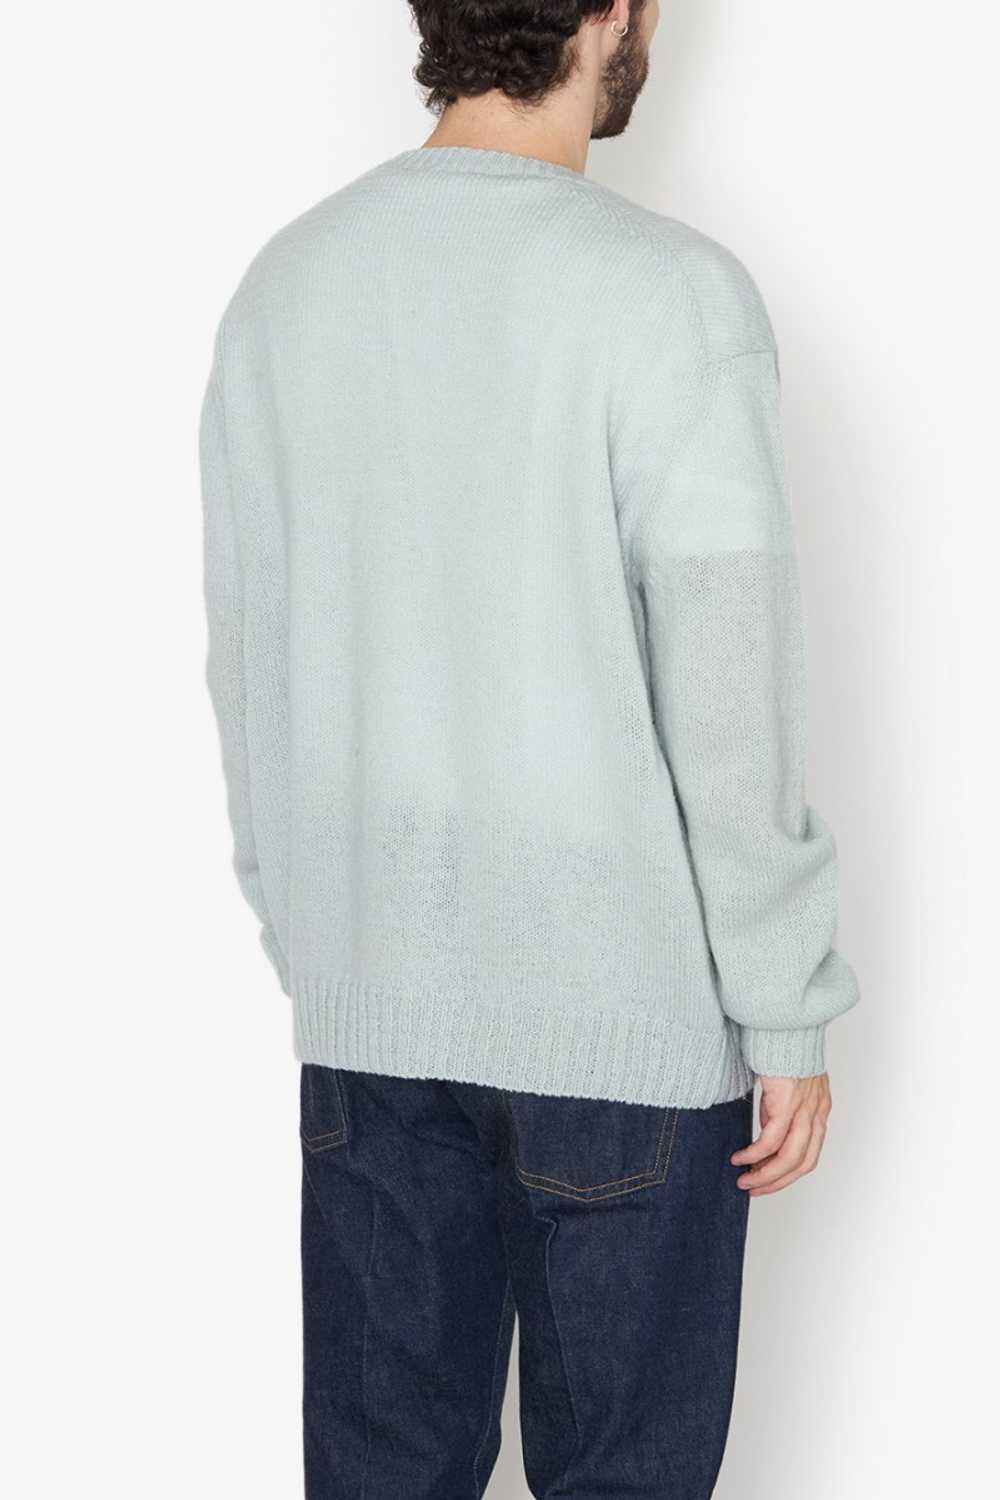 Auralee - pure shetland wool knit sweater mint 5 - image 5